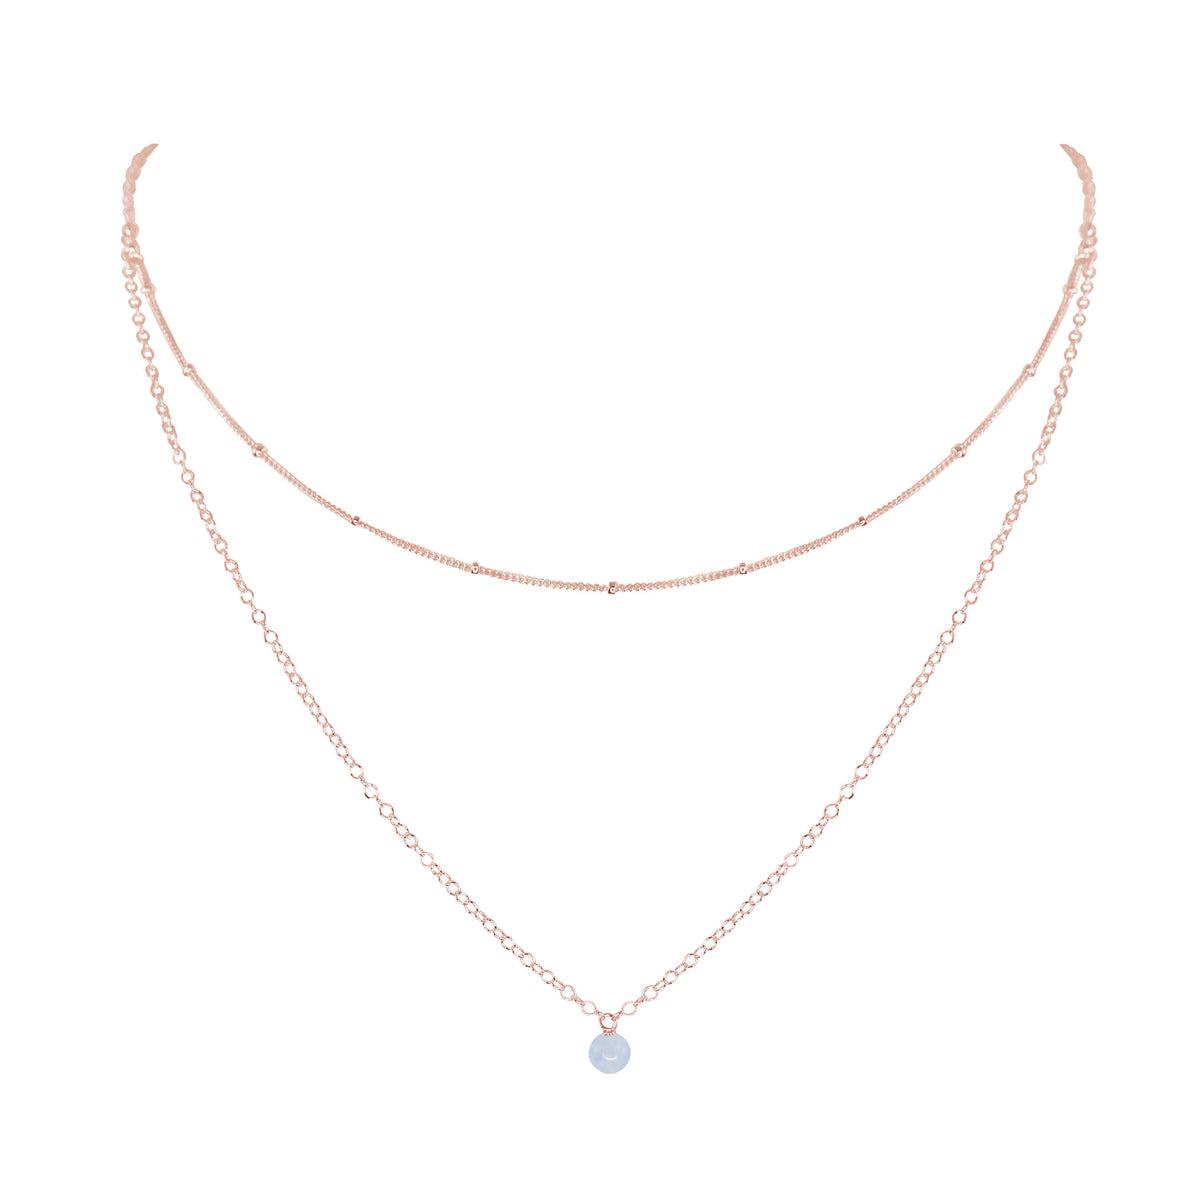 Layered Choker - Blue Lace Agate - 14K Rose Gold Fill - Luna Tide Handmade Jewellery